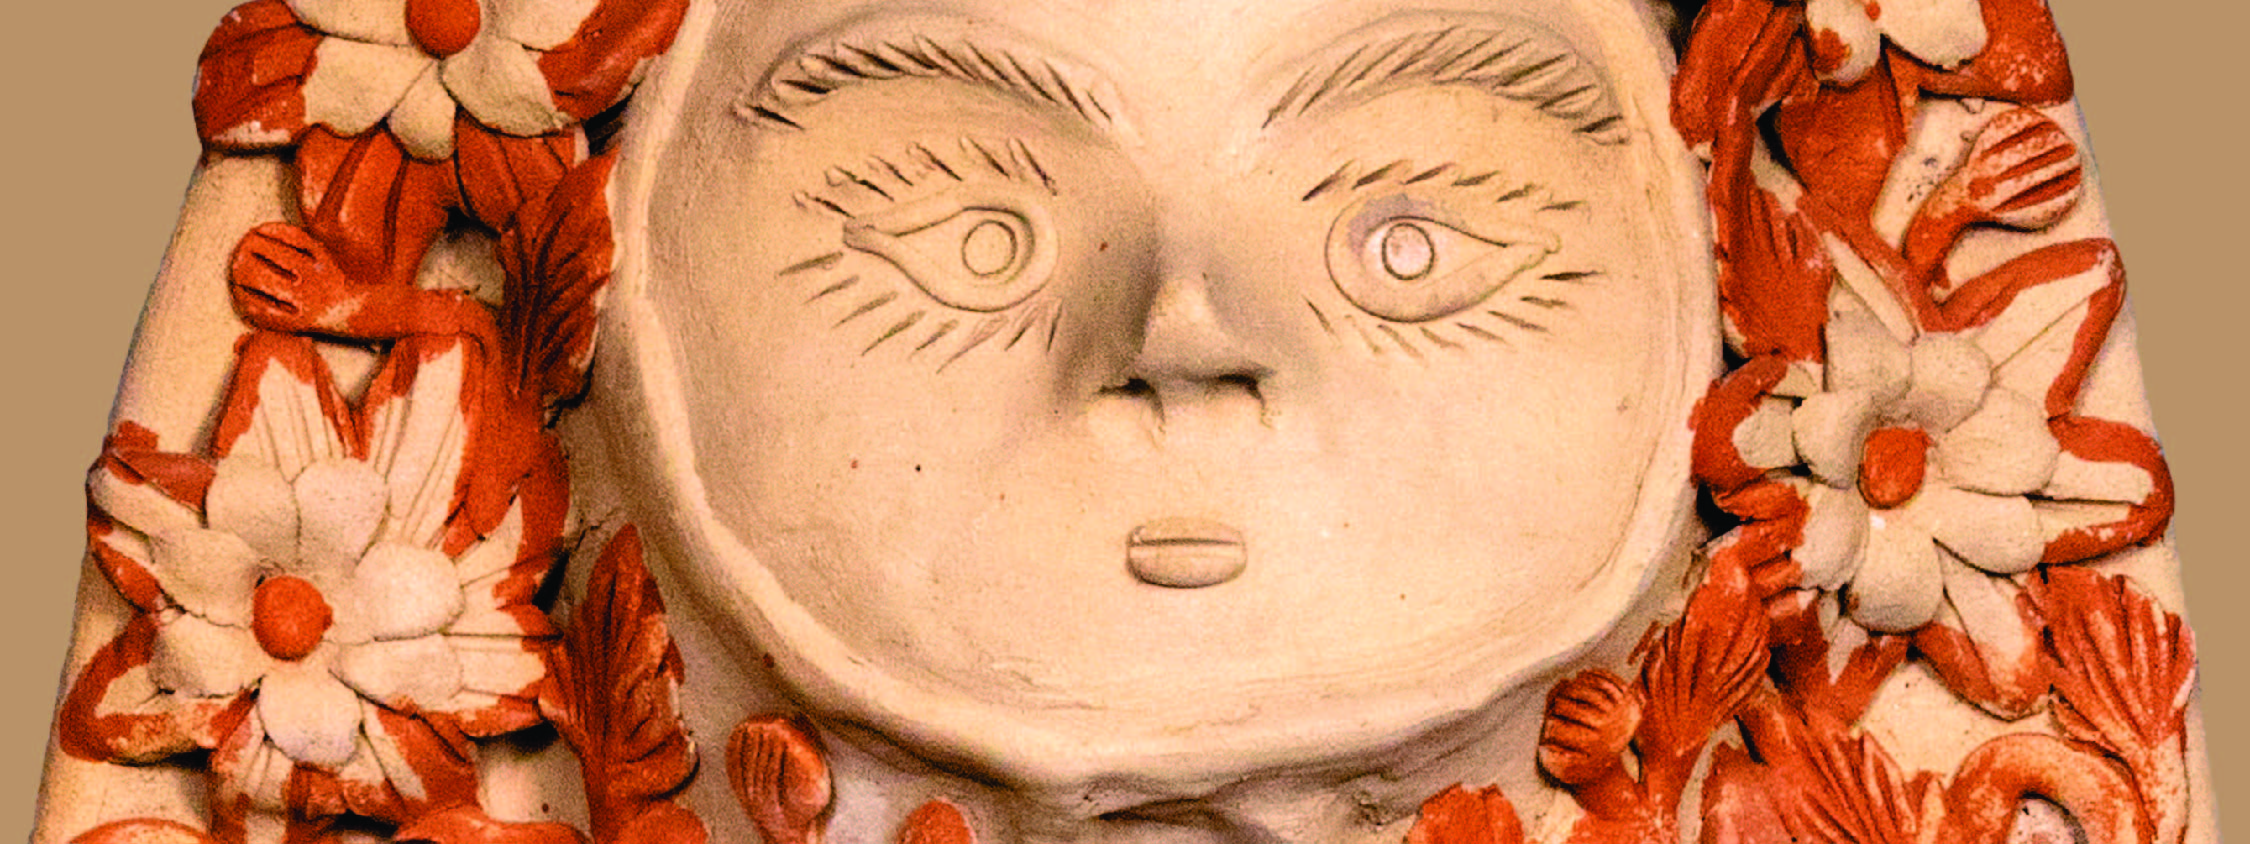 Early Louis Mendez Ceramic Figural Sculpture